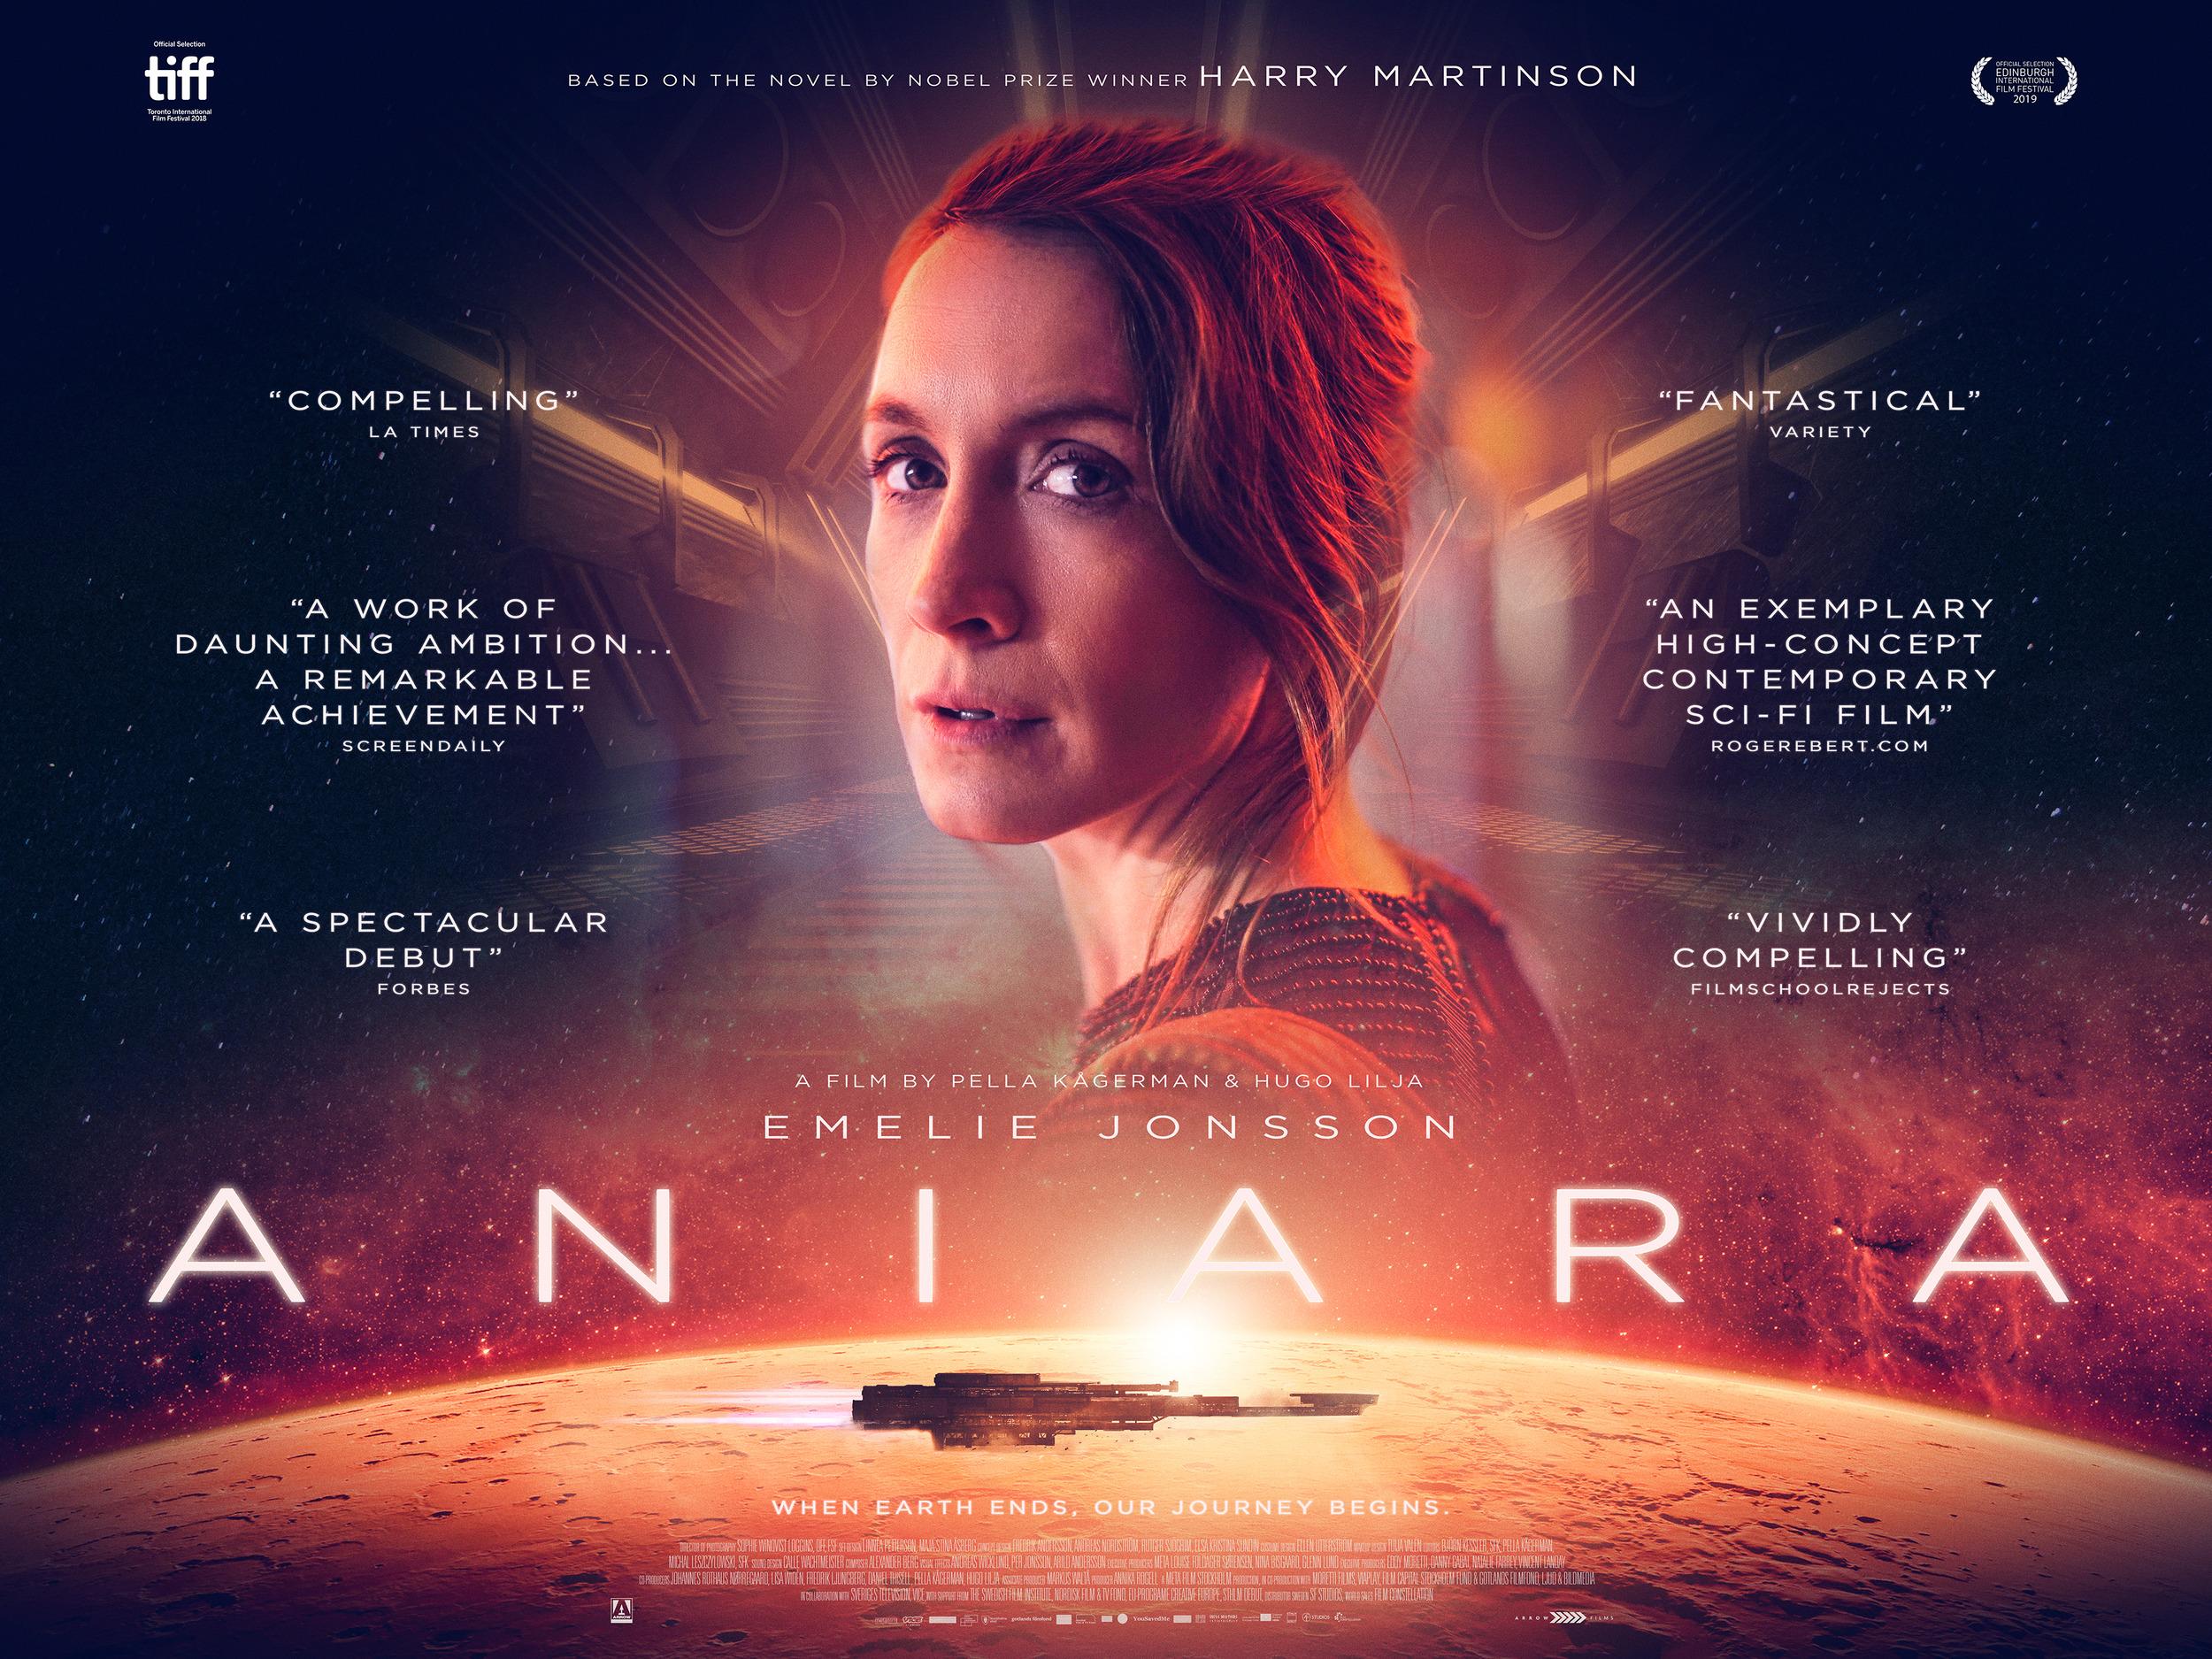 Постер фильма Аниара | Aniara